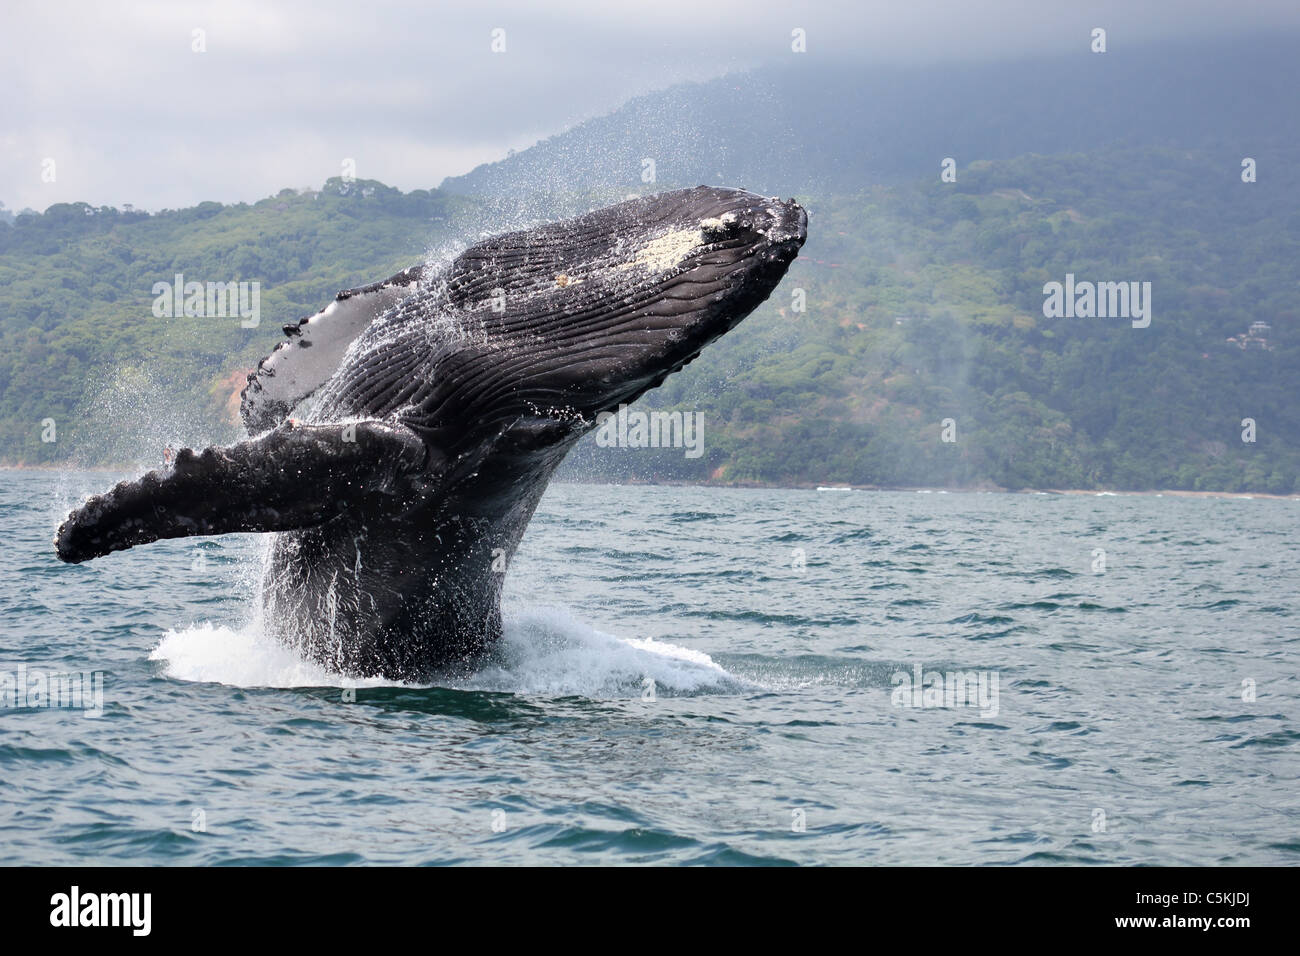 Humpback Whale breaching en parc national Marino Ballena, Costa Rica Banque D'Images